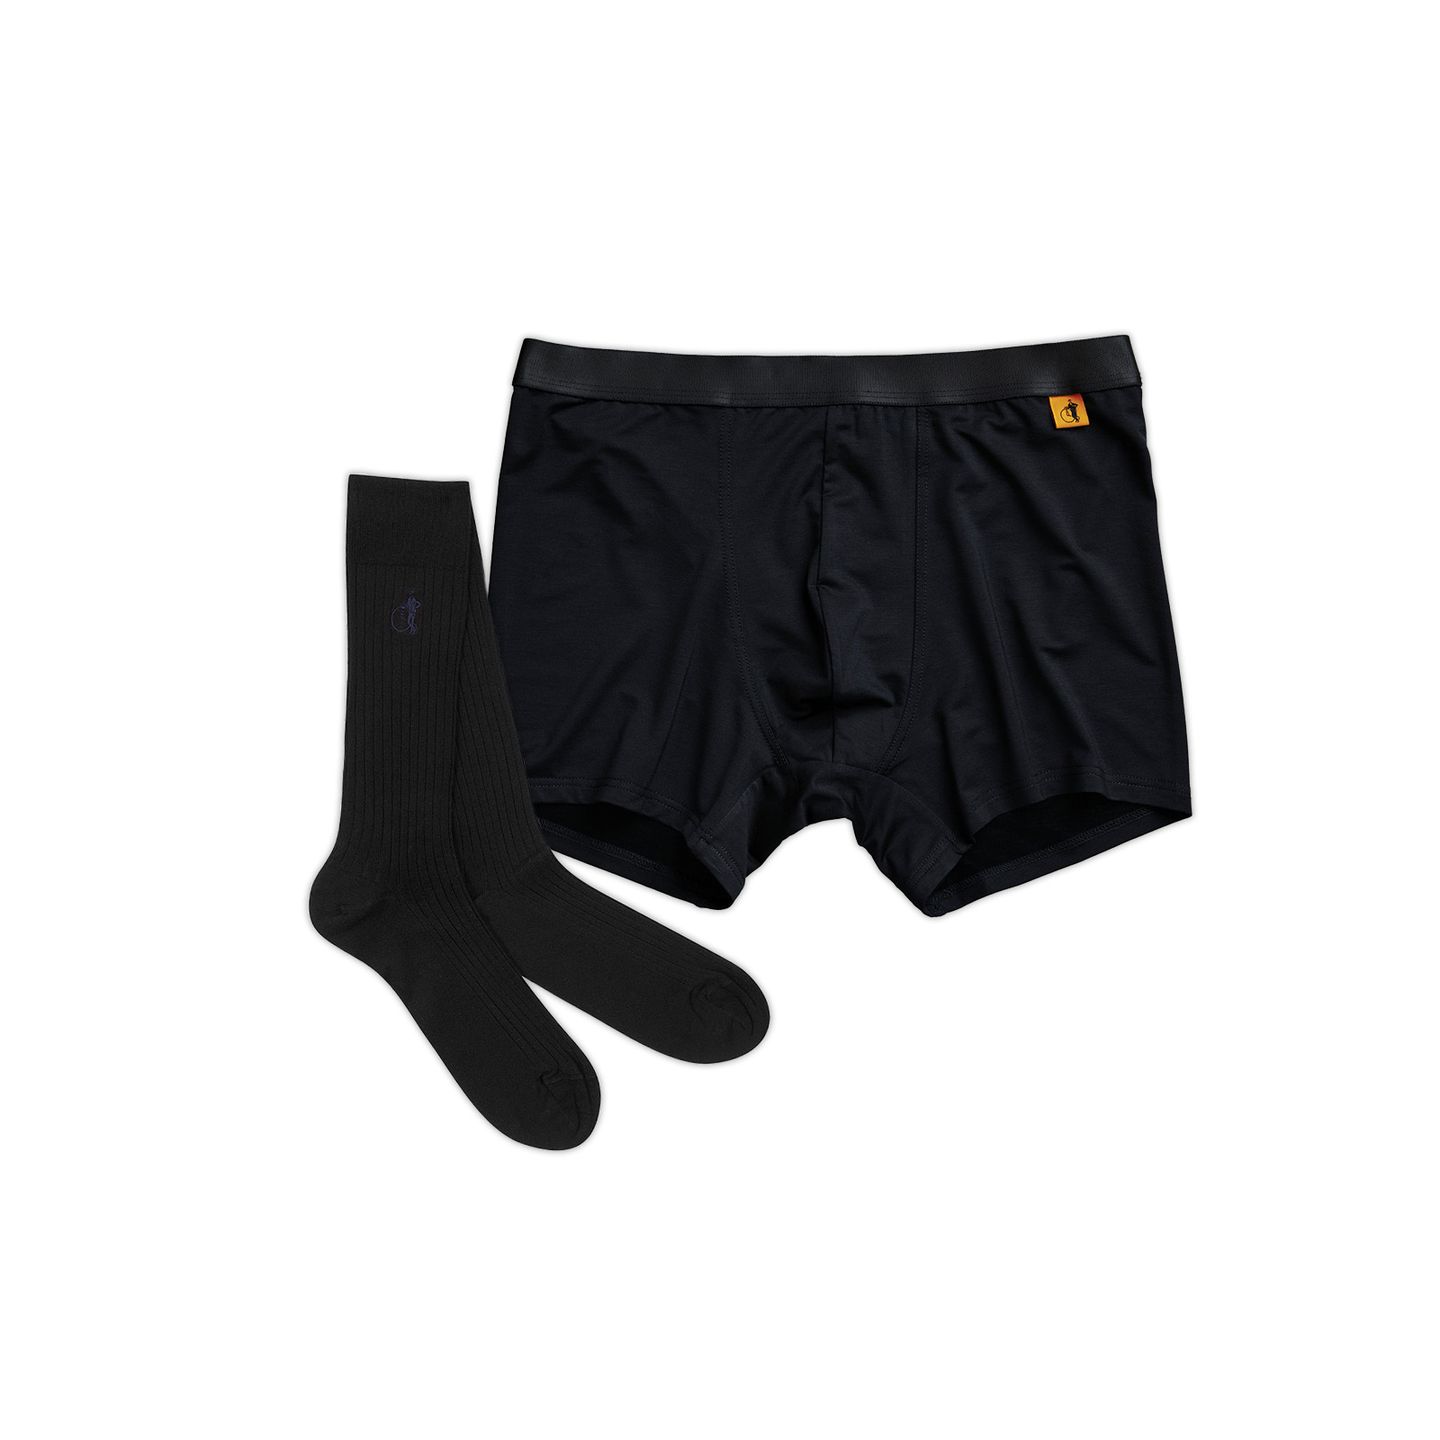 Black boxers and sock bundle